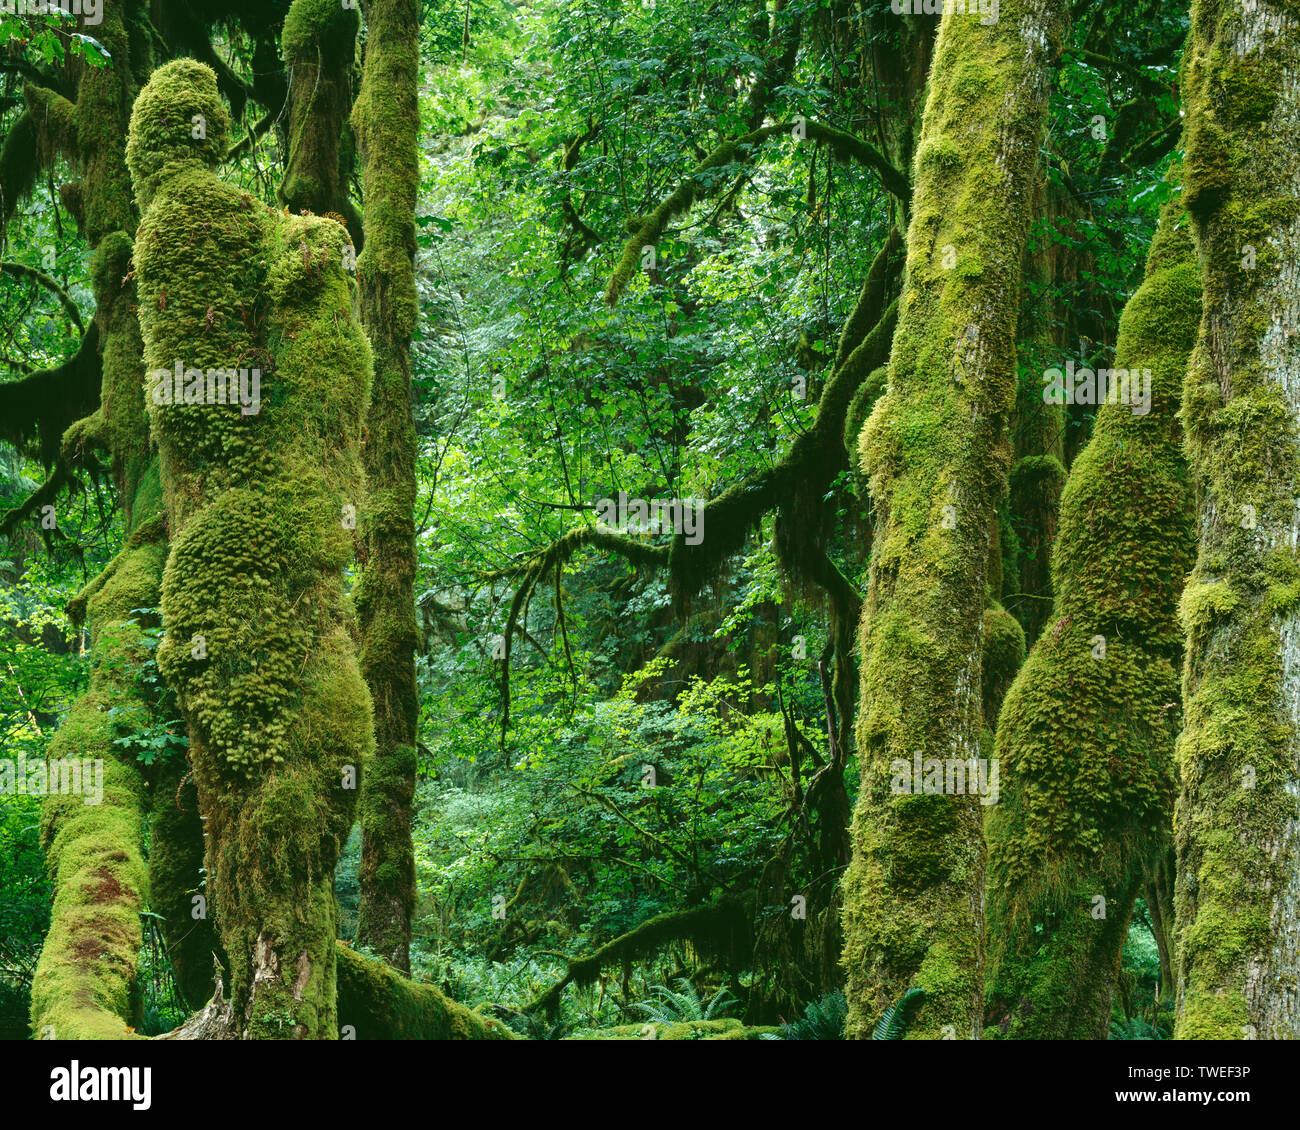 USA, Washington, Olympic National Park, Lush moss grows on bigleaf maple trees, Hoh Rain Forest. Stock Photo